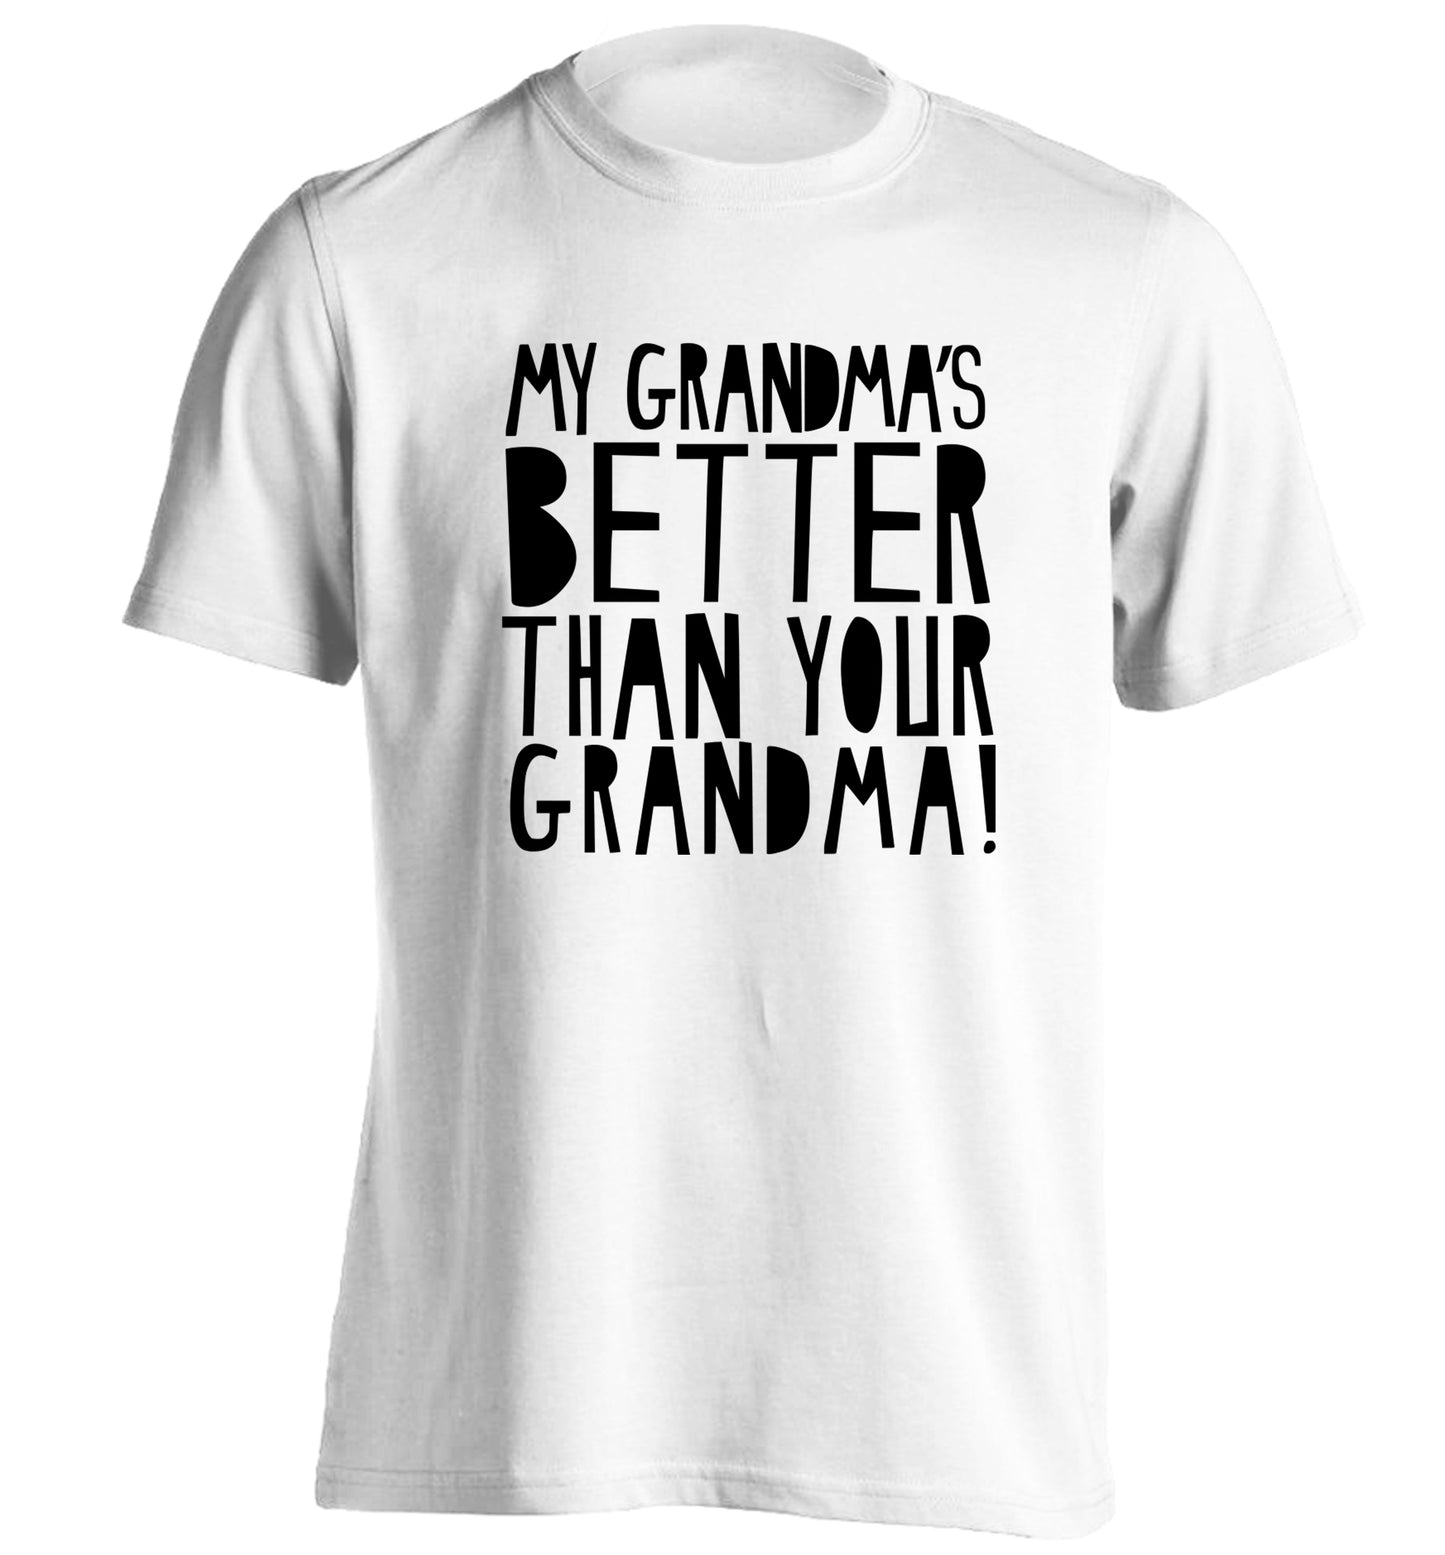 My grandma's better than your grandma adults unisex white Tshirt 2XL